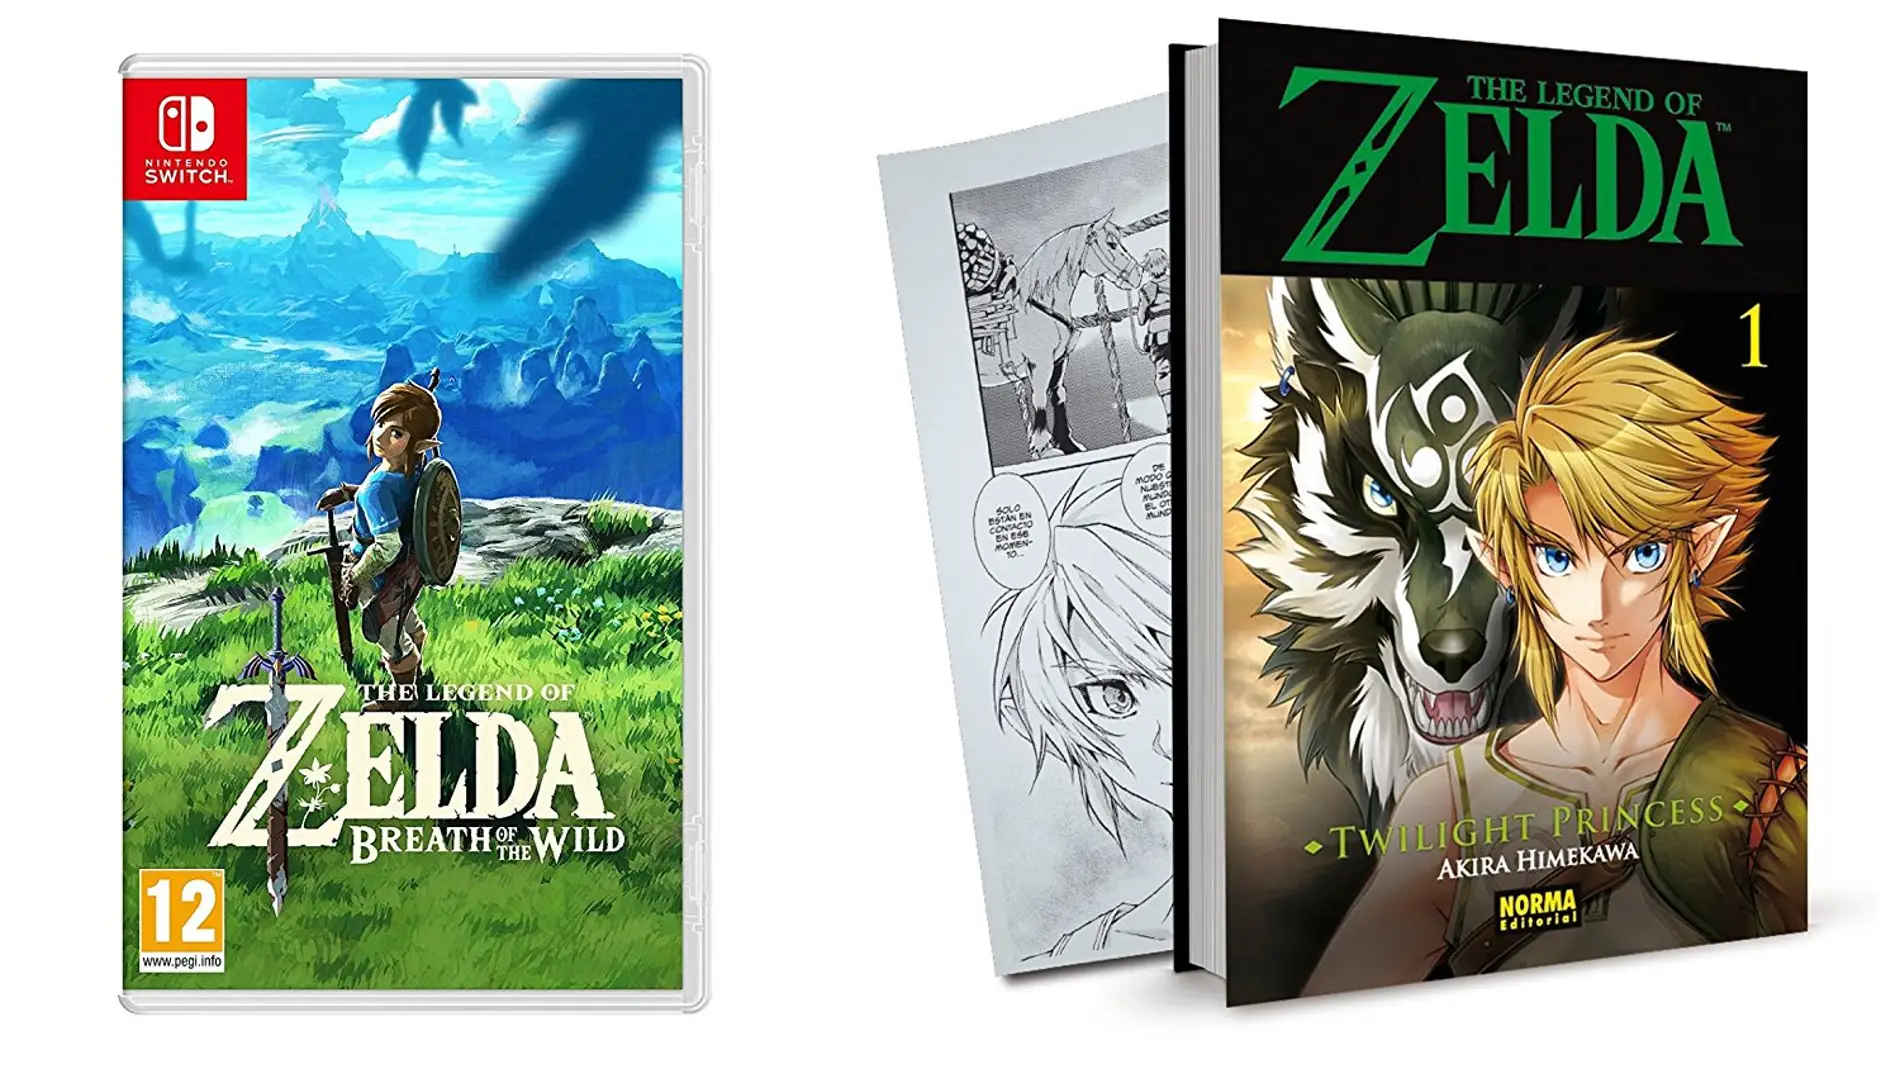 The legend of zelda: breath of the wild (Tapa dura) · Manga · El Corte  Inglés